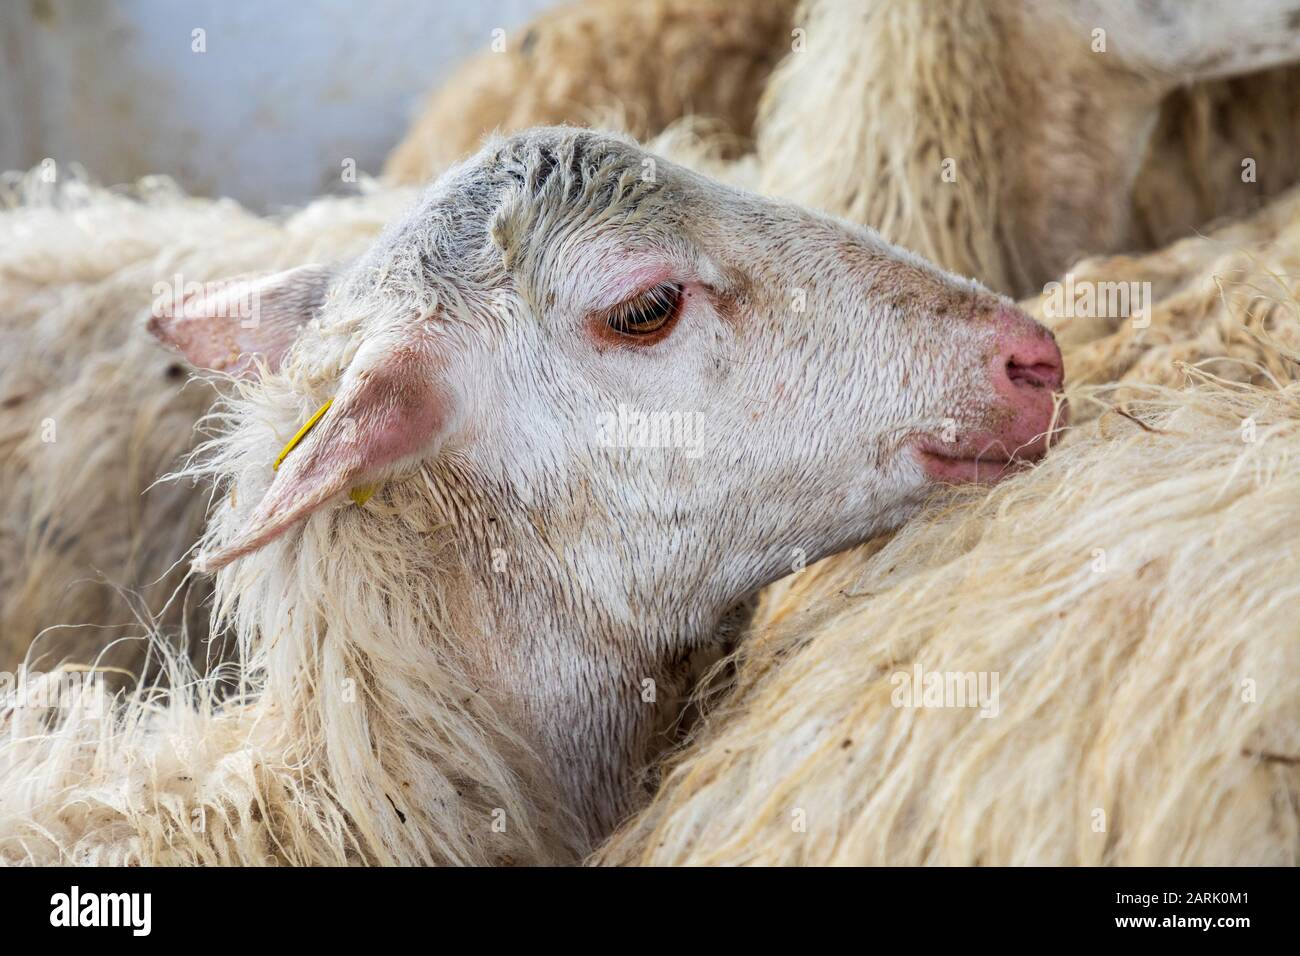 Italy, Sicily, Polina. Sheep in rural Pollina. Stock Photo